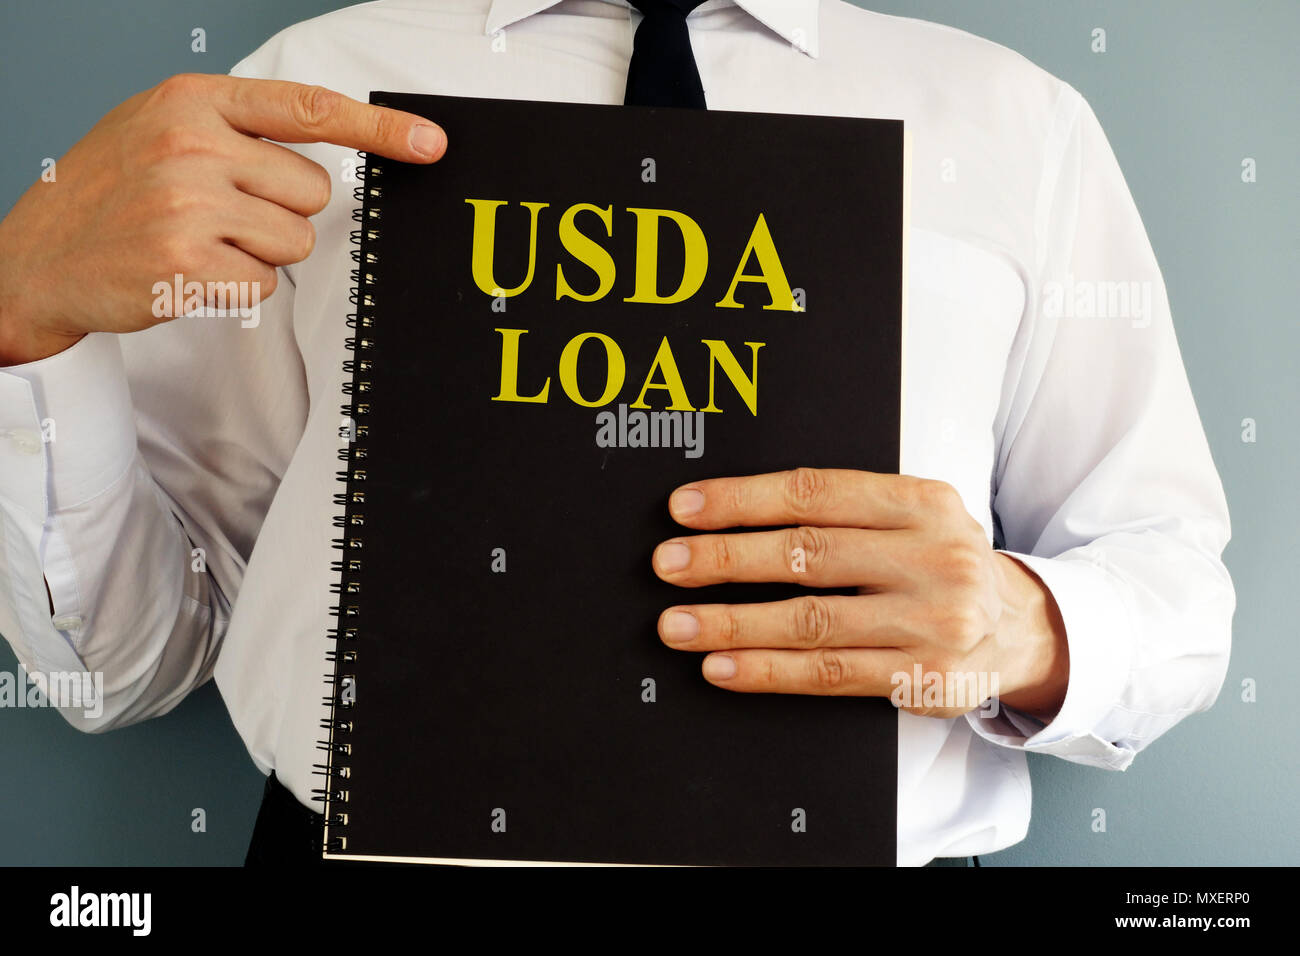 USDA Loan concept. Man holding book. Stock Photo